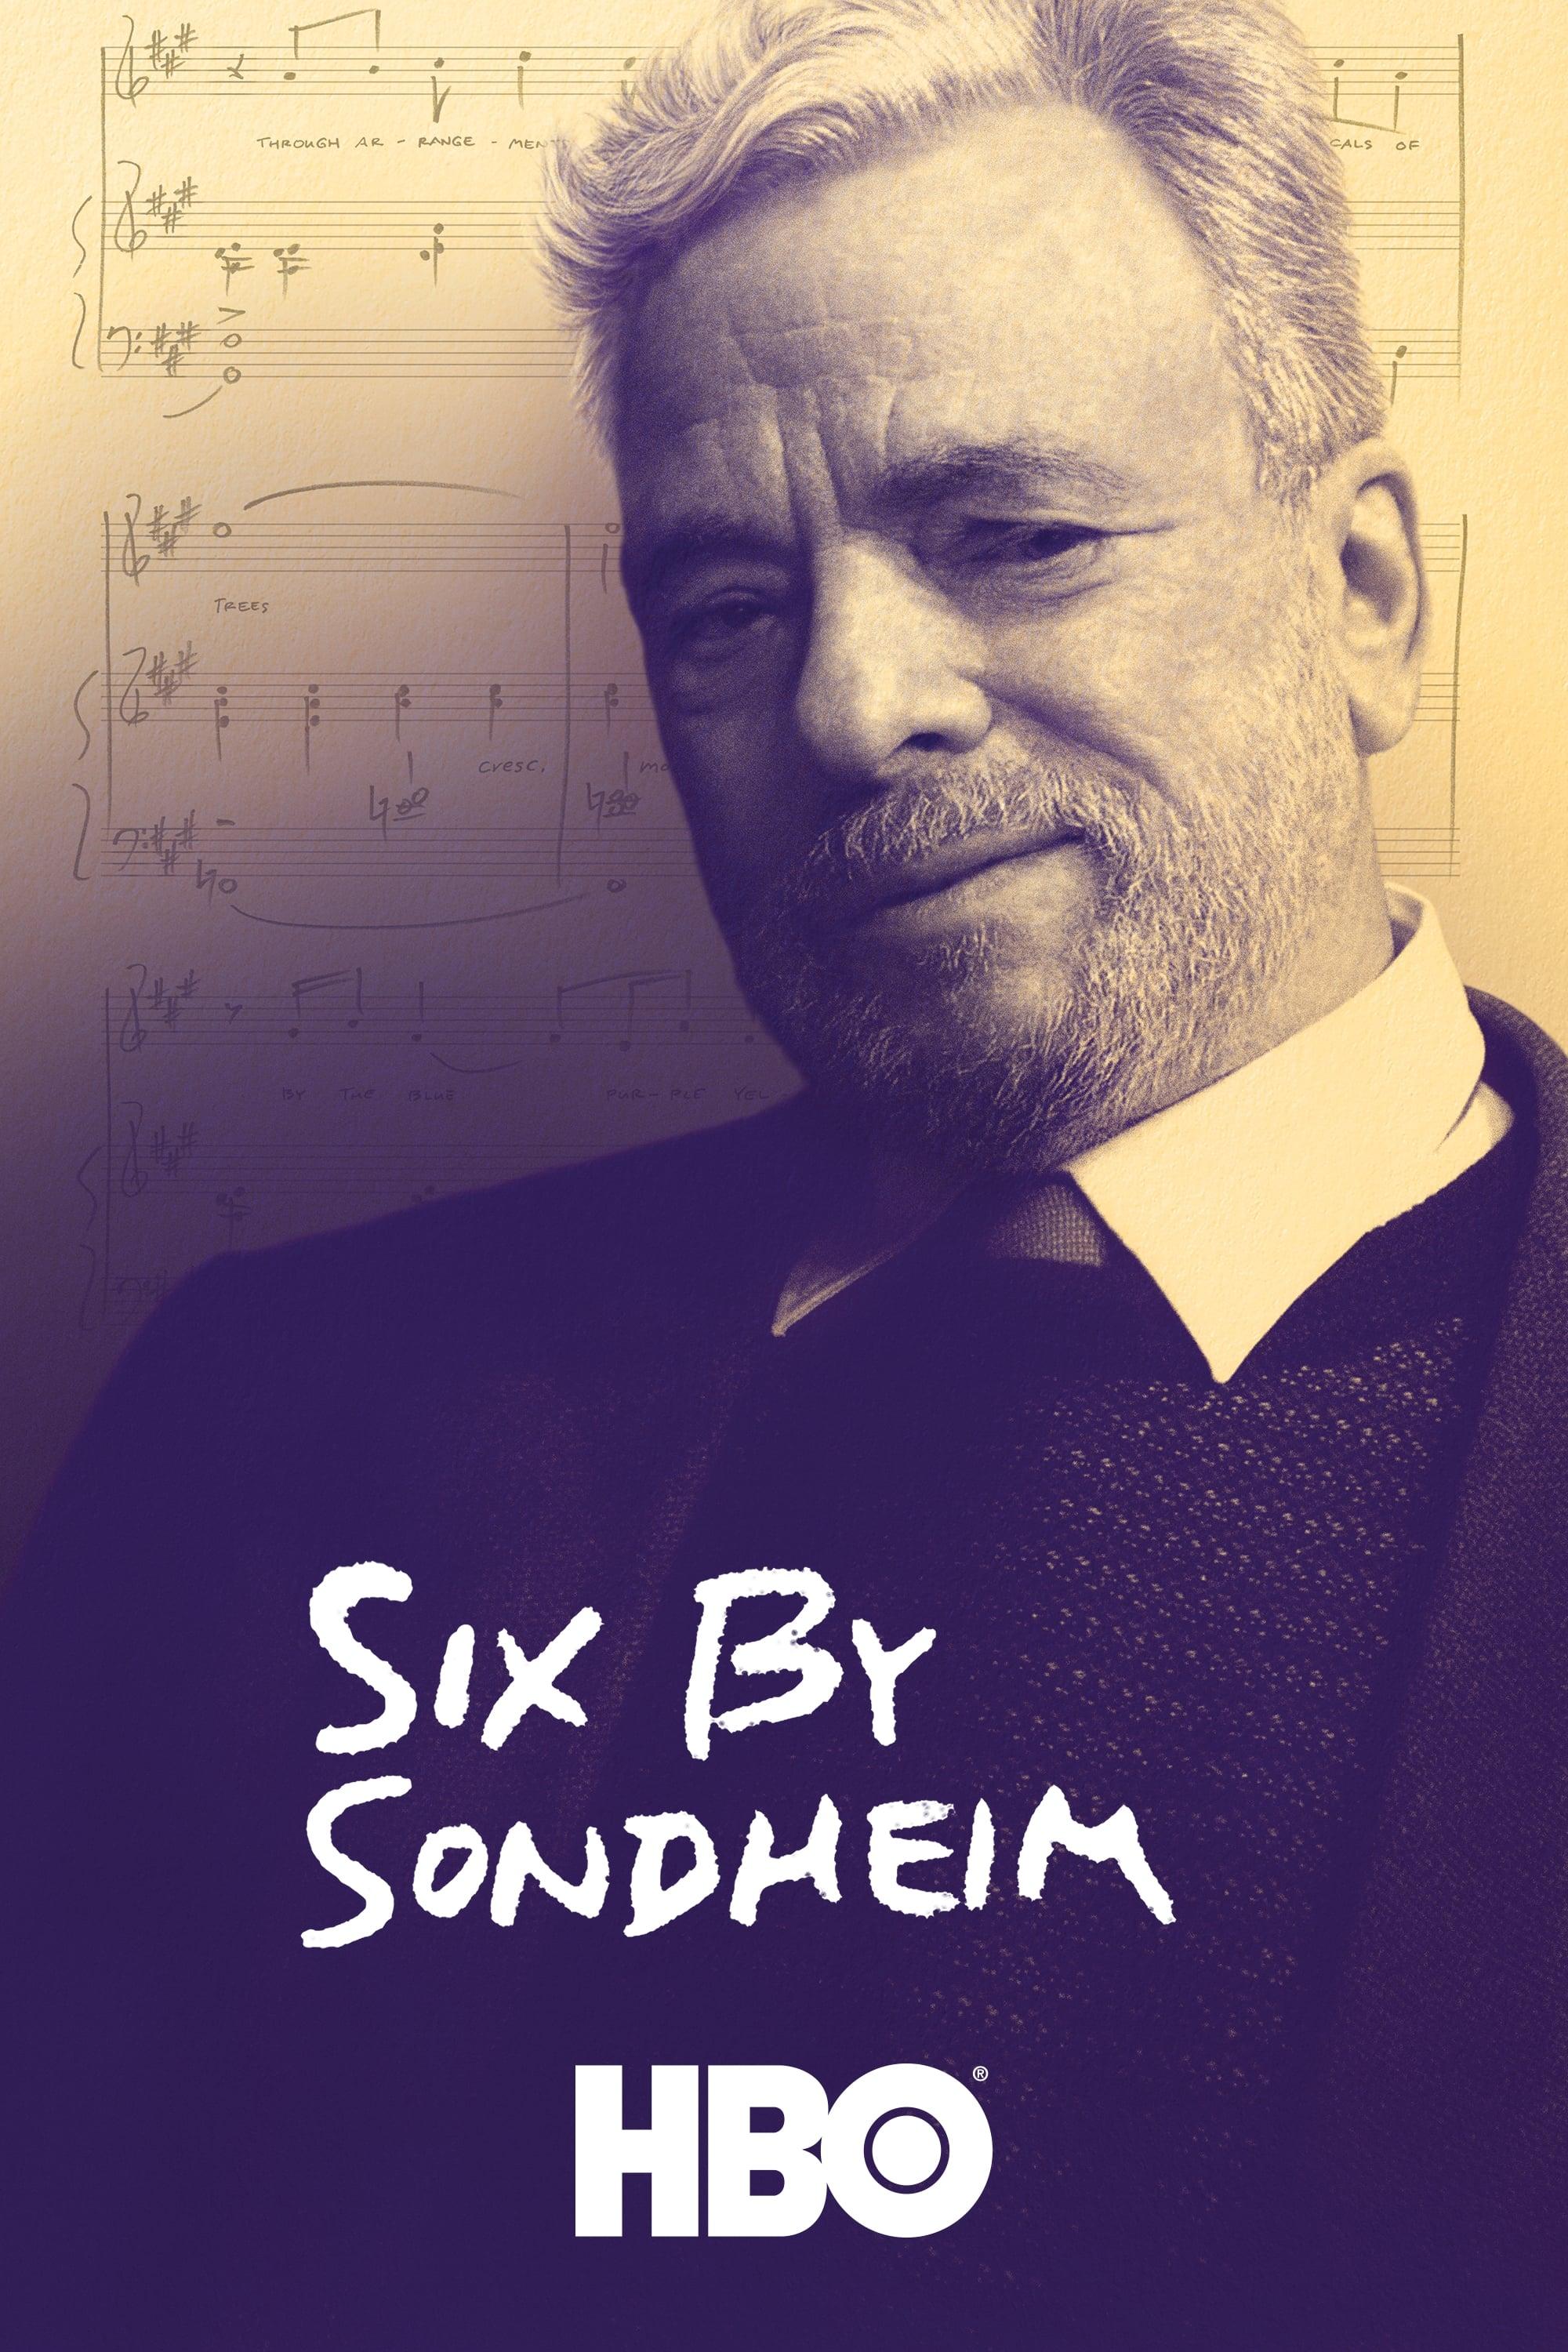 Six by Sondheim poster